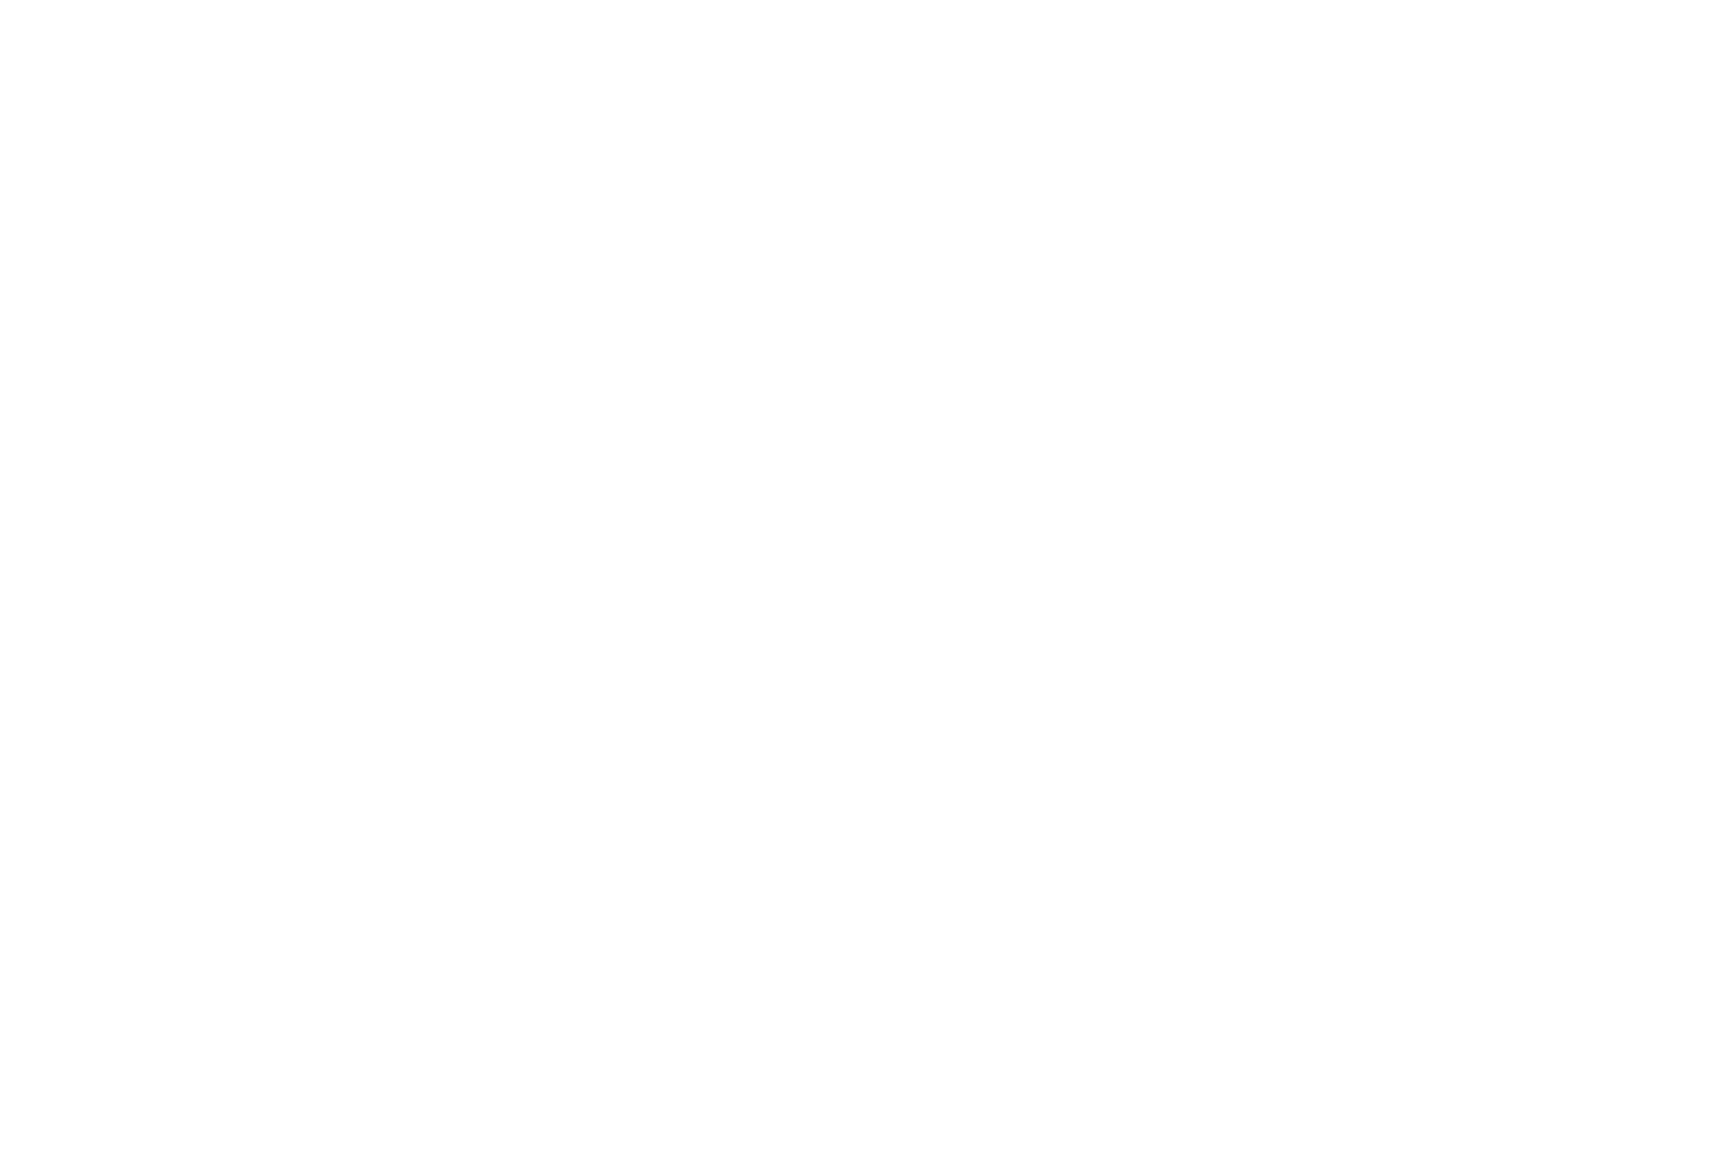 NOMINATED  - BEST SHORT FILM  - LARGO FILM AWARDS 2016 (1).png